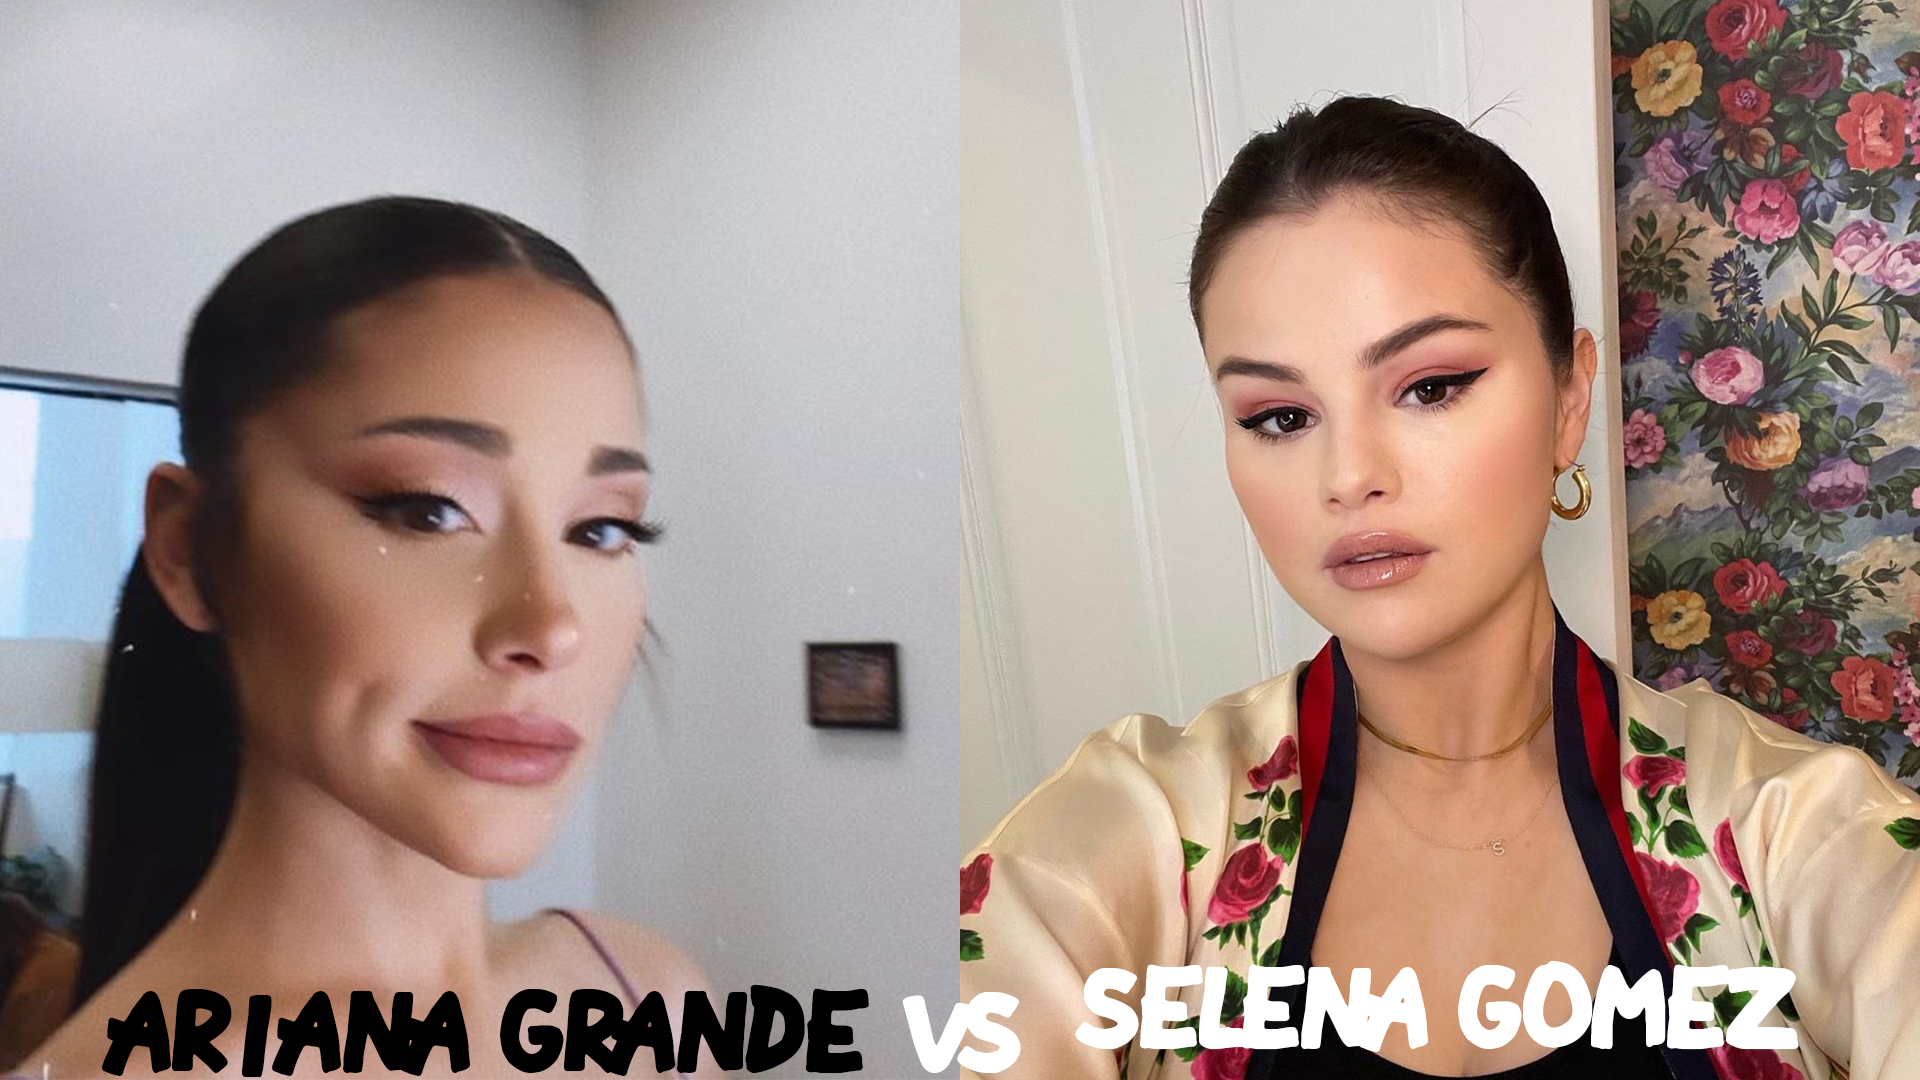 Ariana Grande vs Selena Gomez Who is more famous